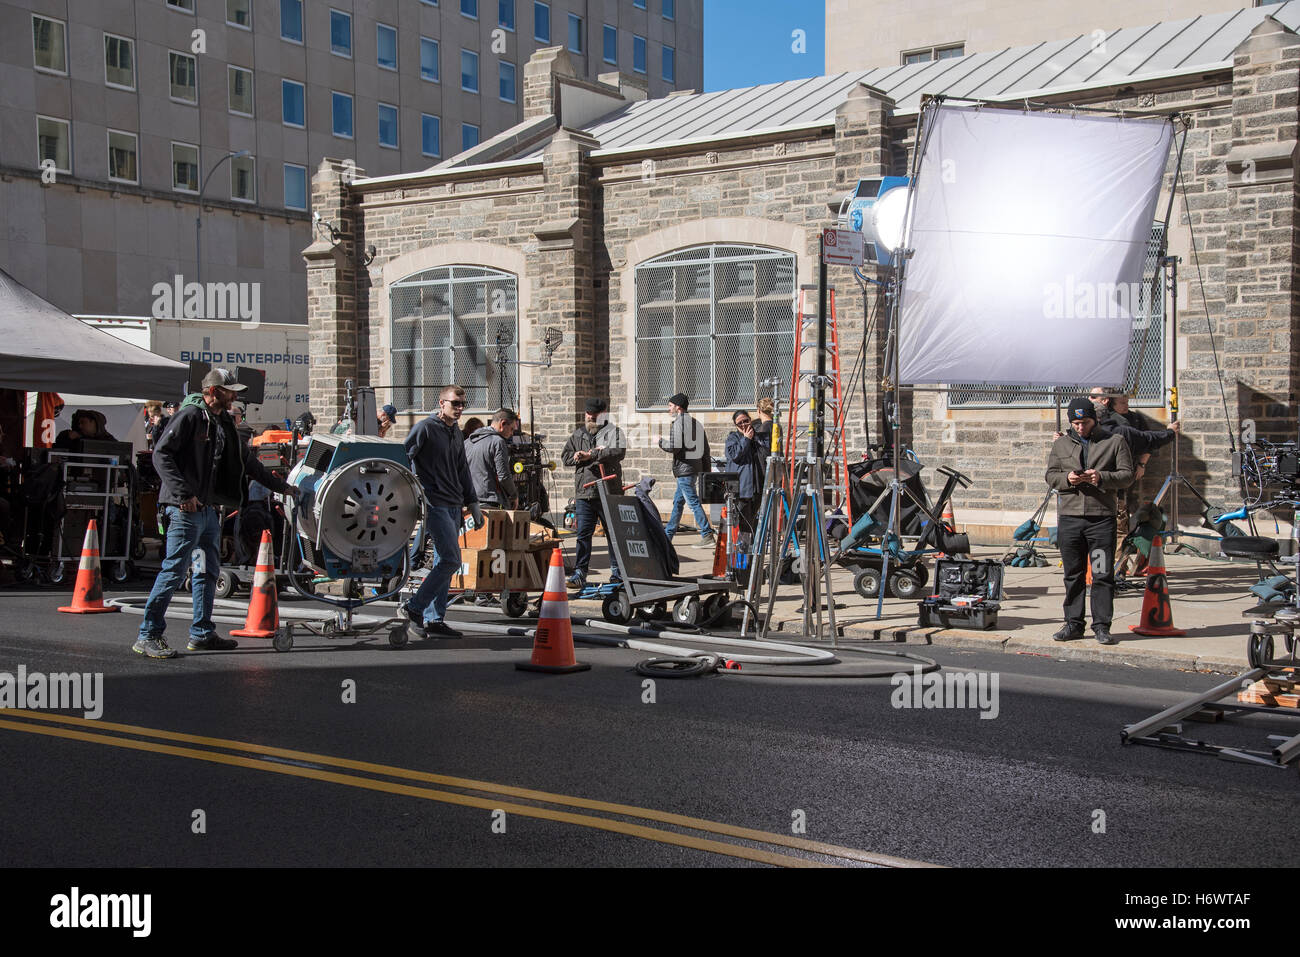 Claremont Av Upper West Side New York USA  Film crew setting up their filming equipment on the sidewalk Stock Photo